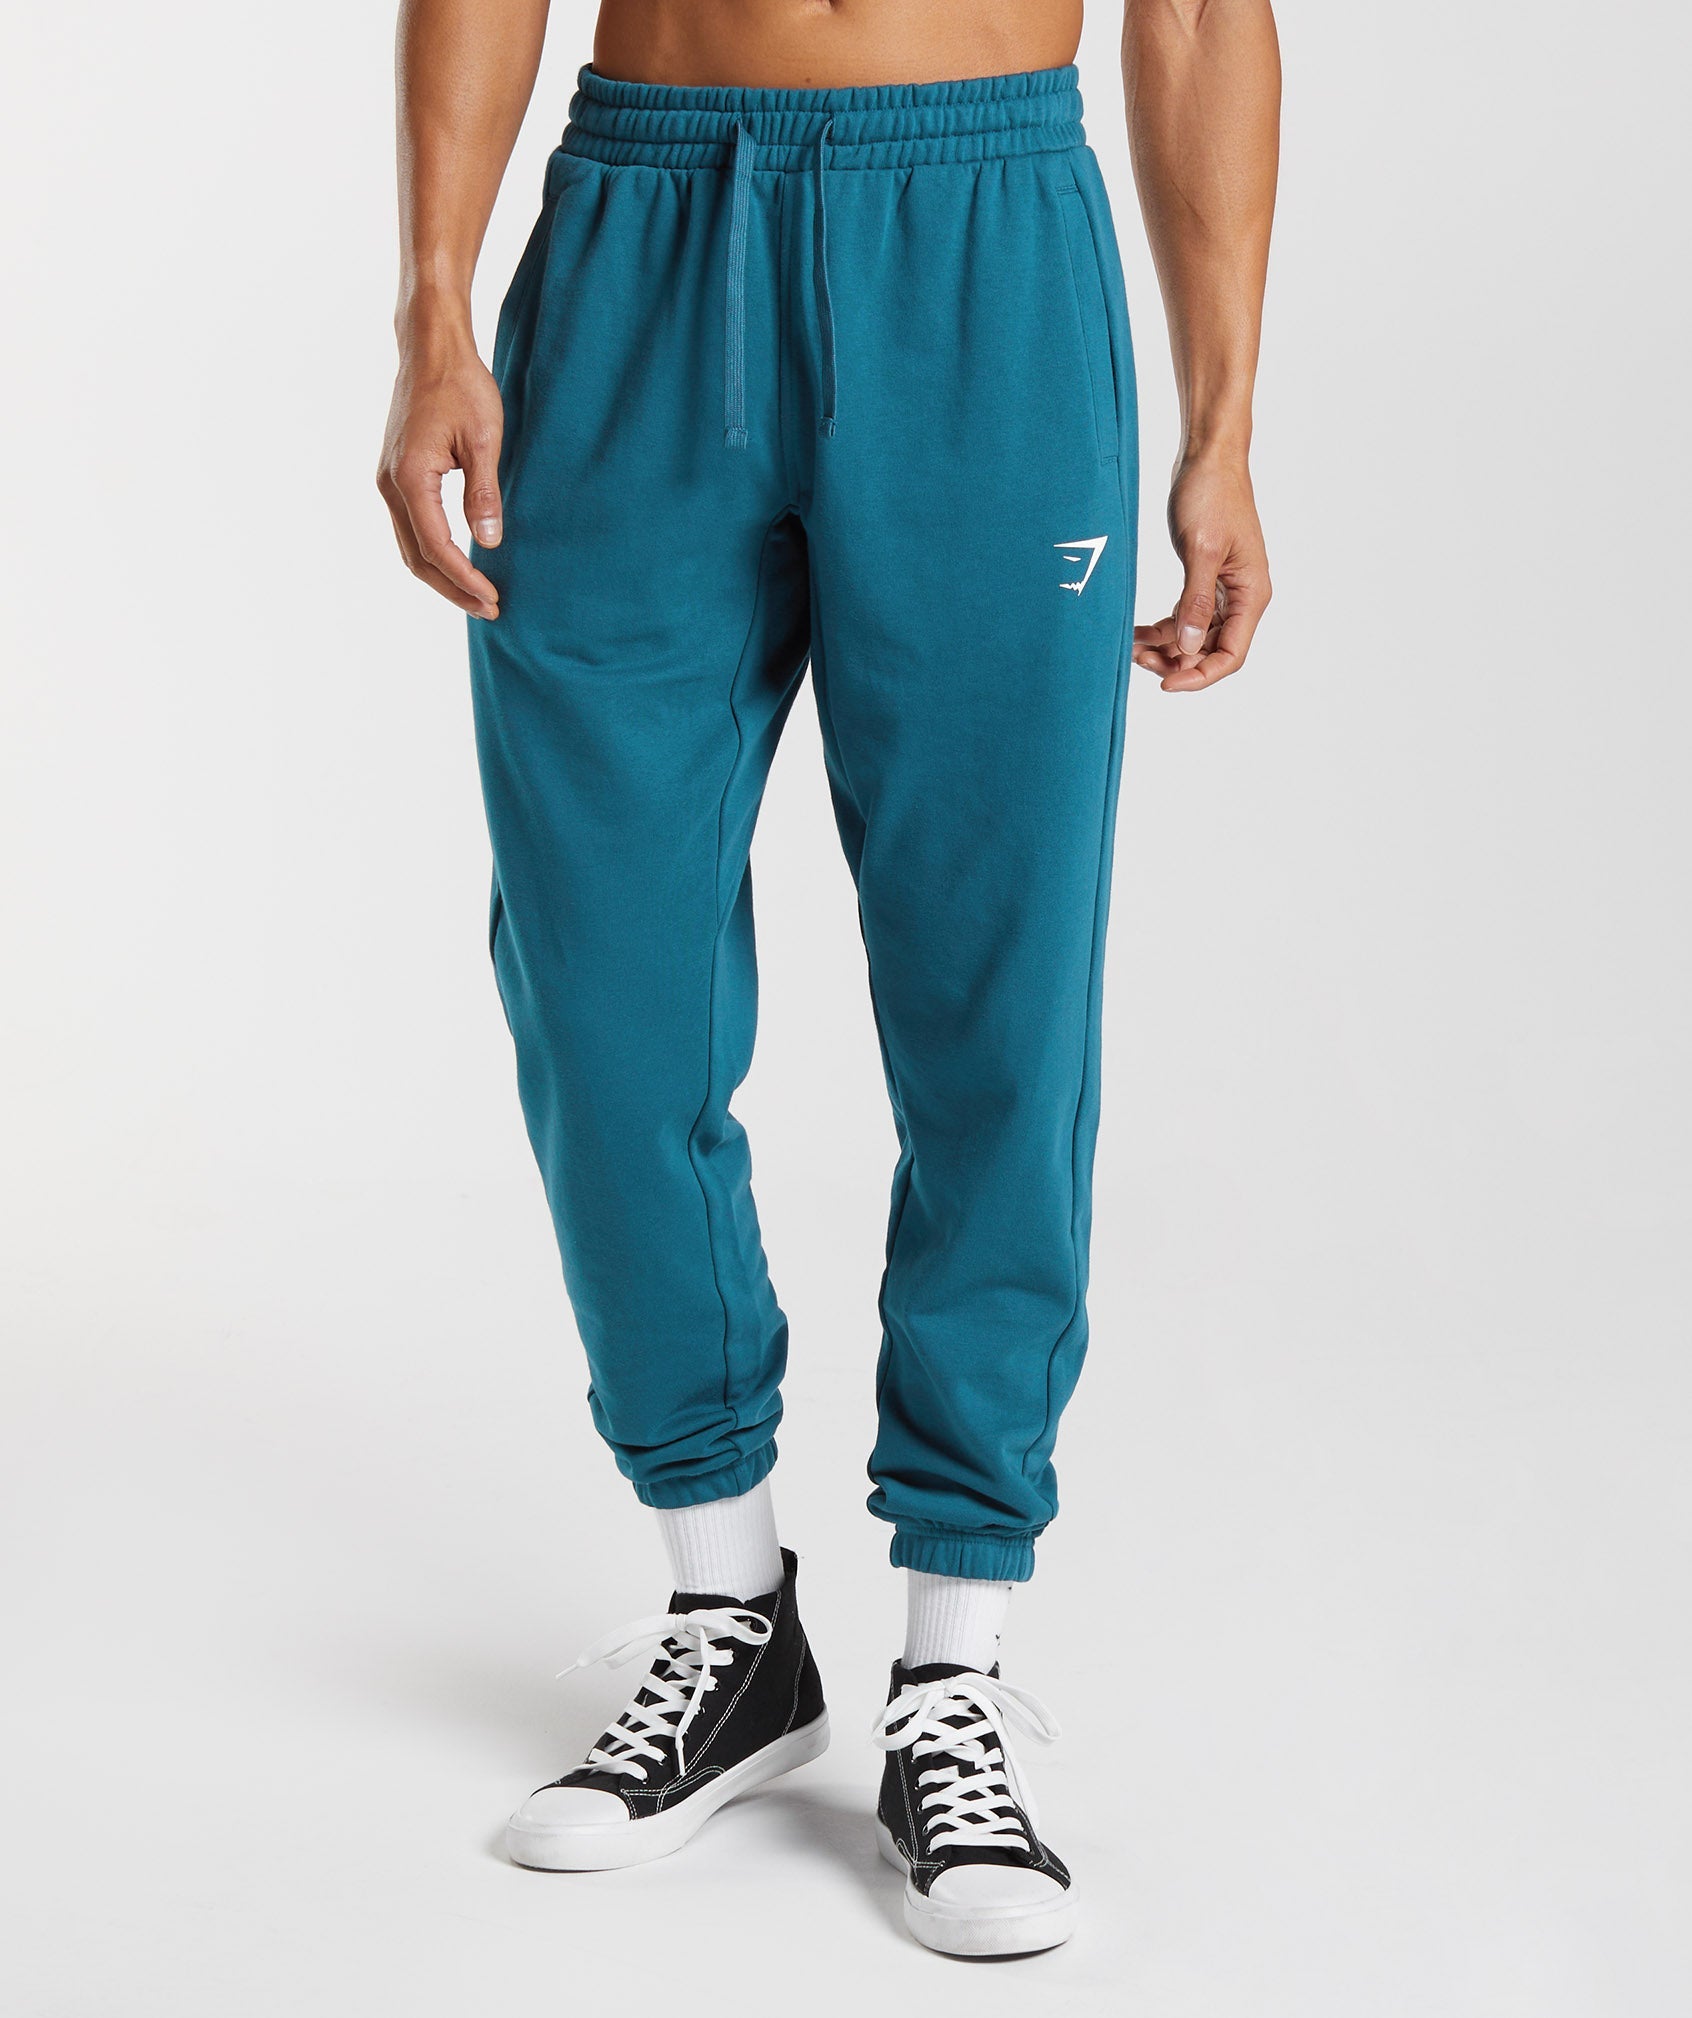 Gymshark, Pants, Mens Gymshark Green Sweatpants Size Medium